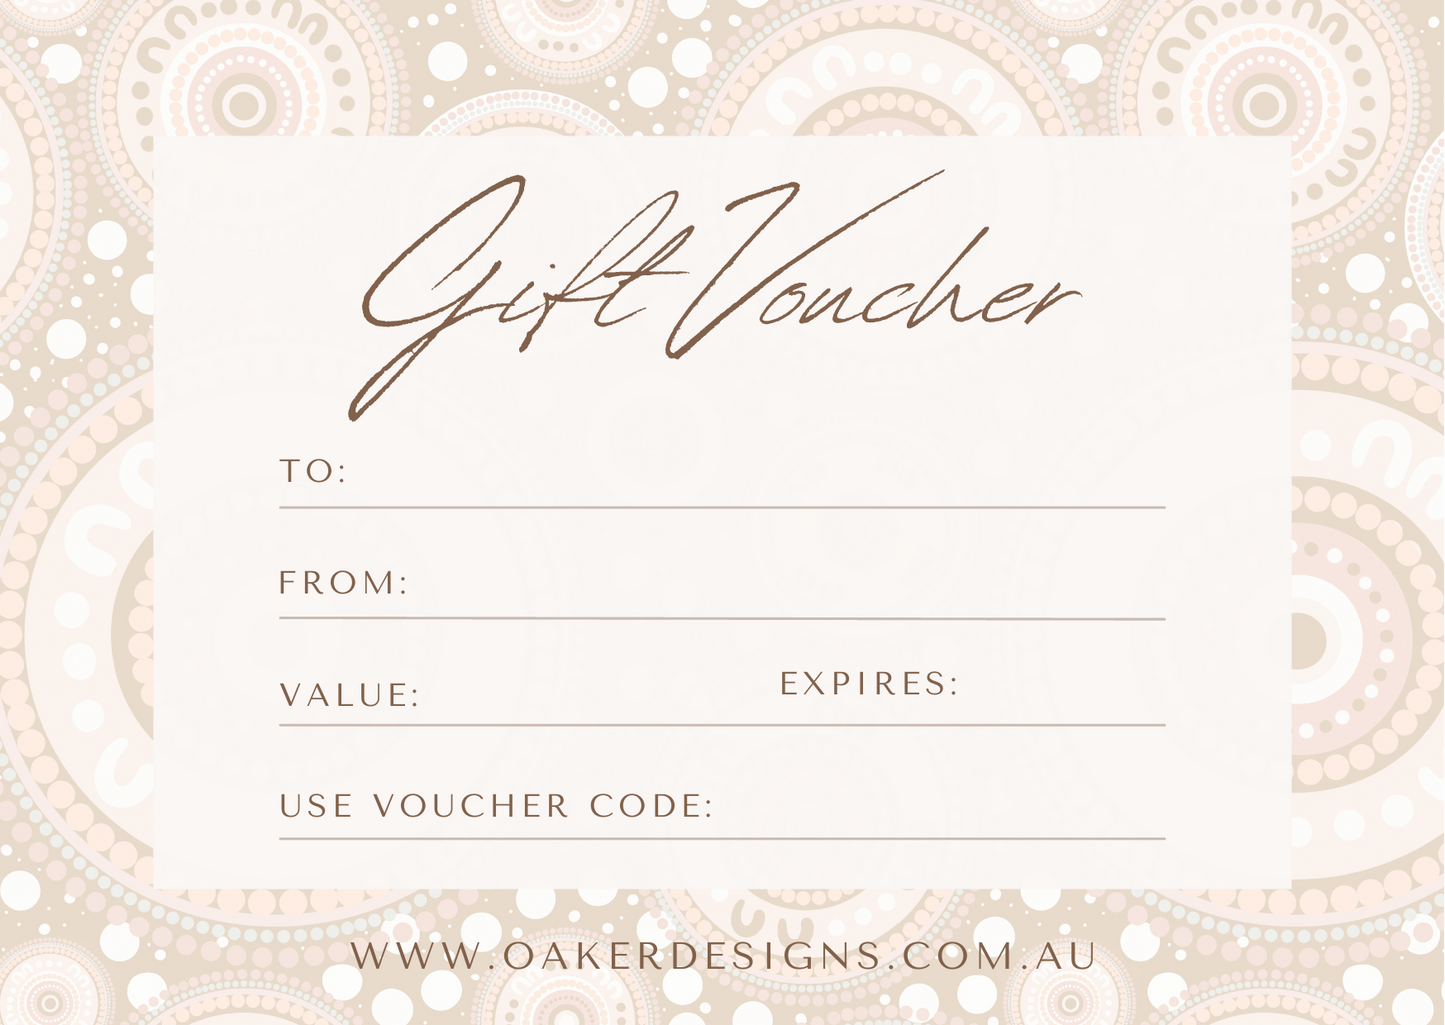 Oaker Designs Gift Voucher